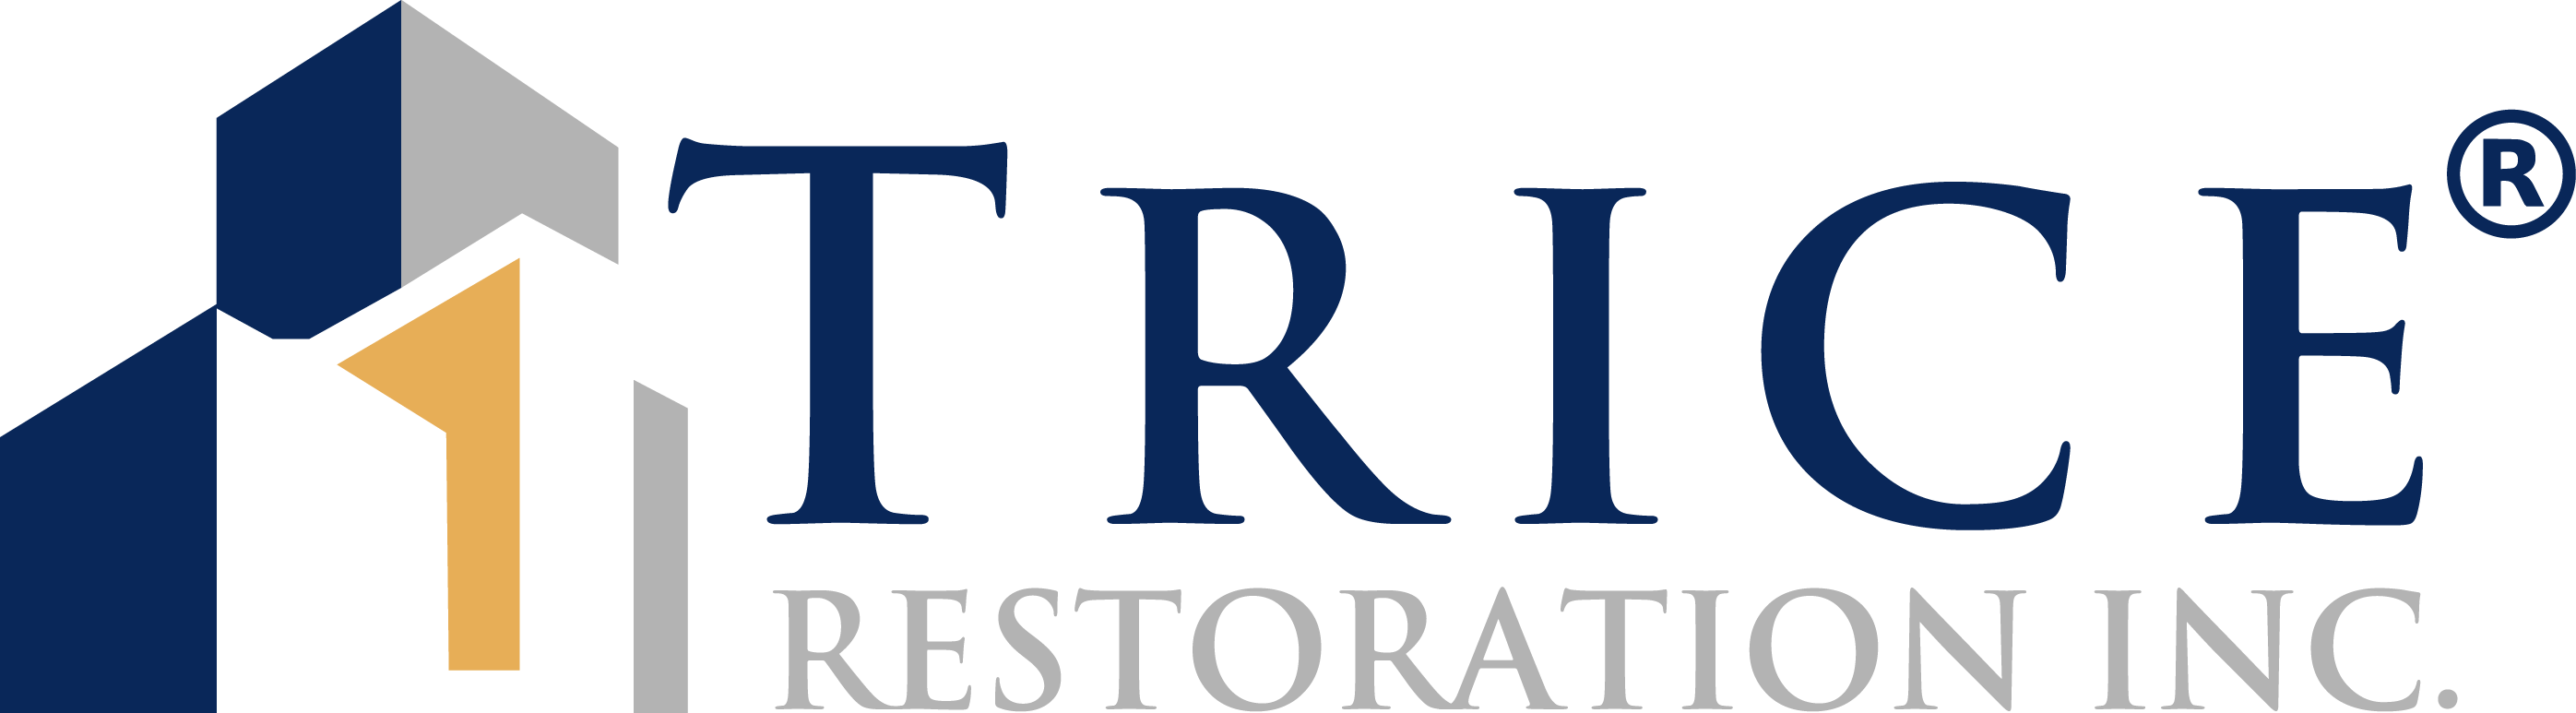 Trice Restoration Inc